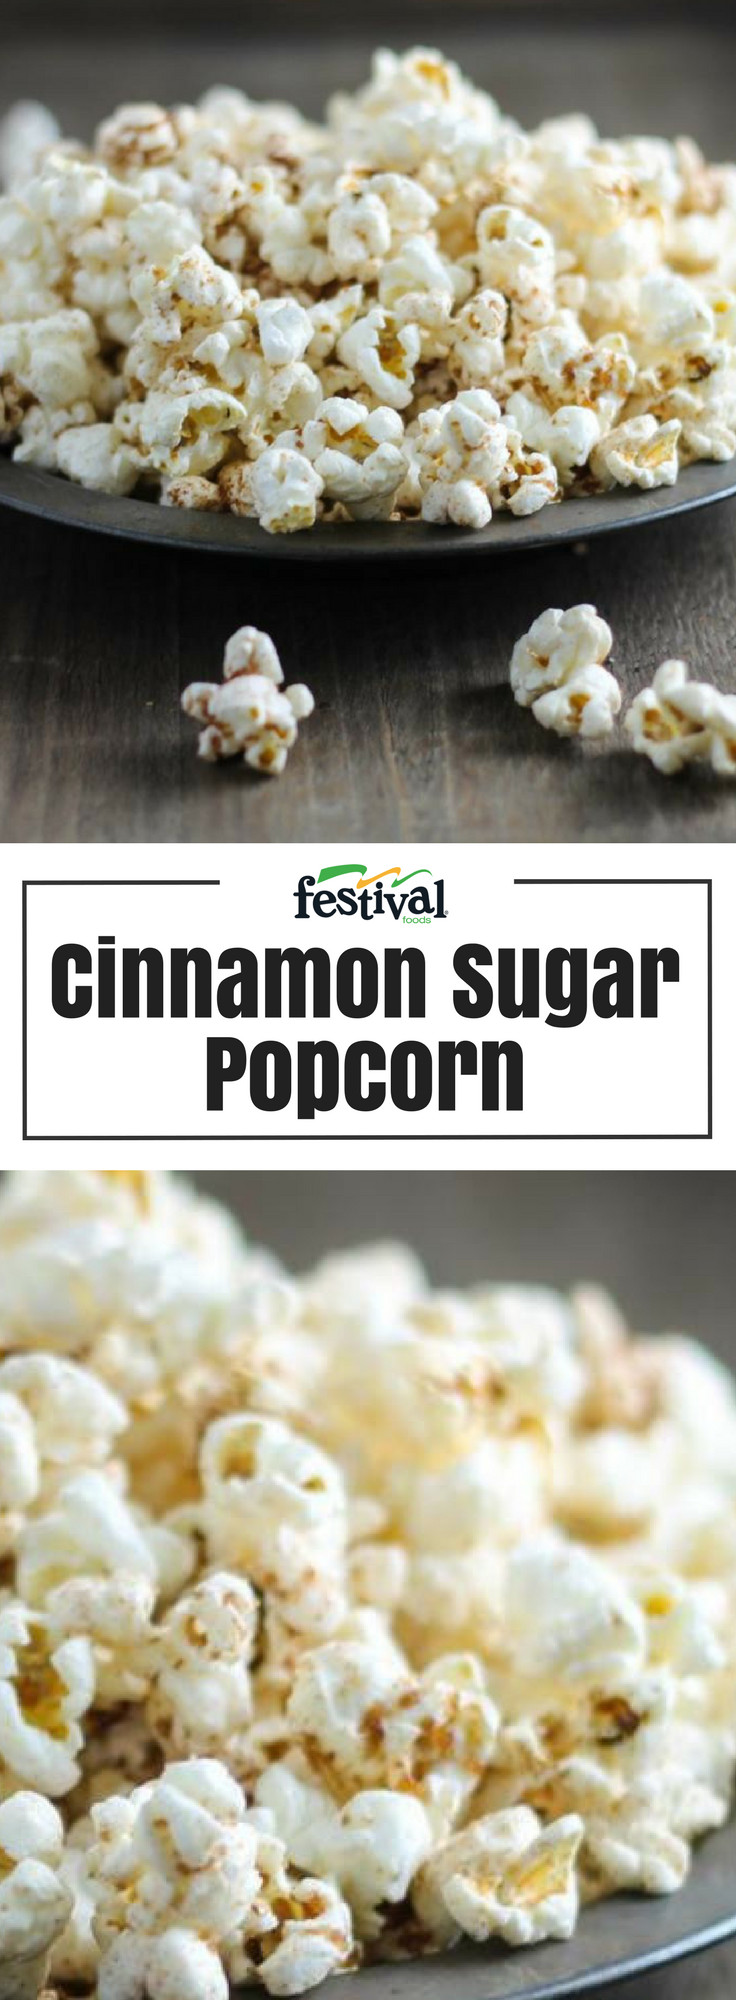 Low Calorie Popcorn Recipes
 Cinnamon Sugar Popcorn Recipe